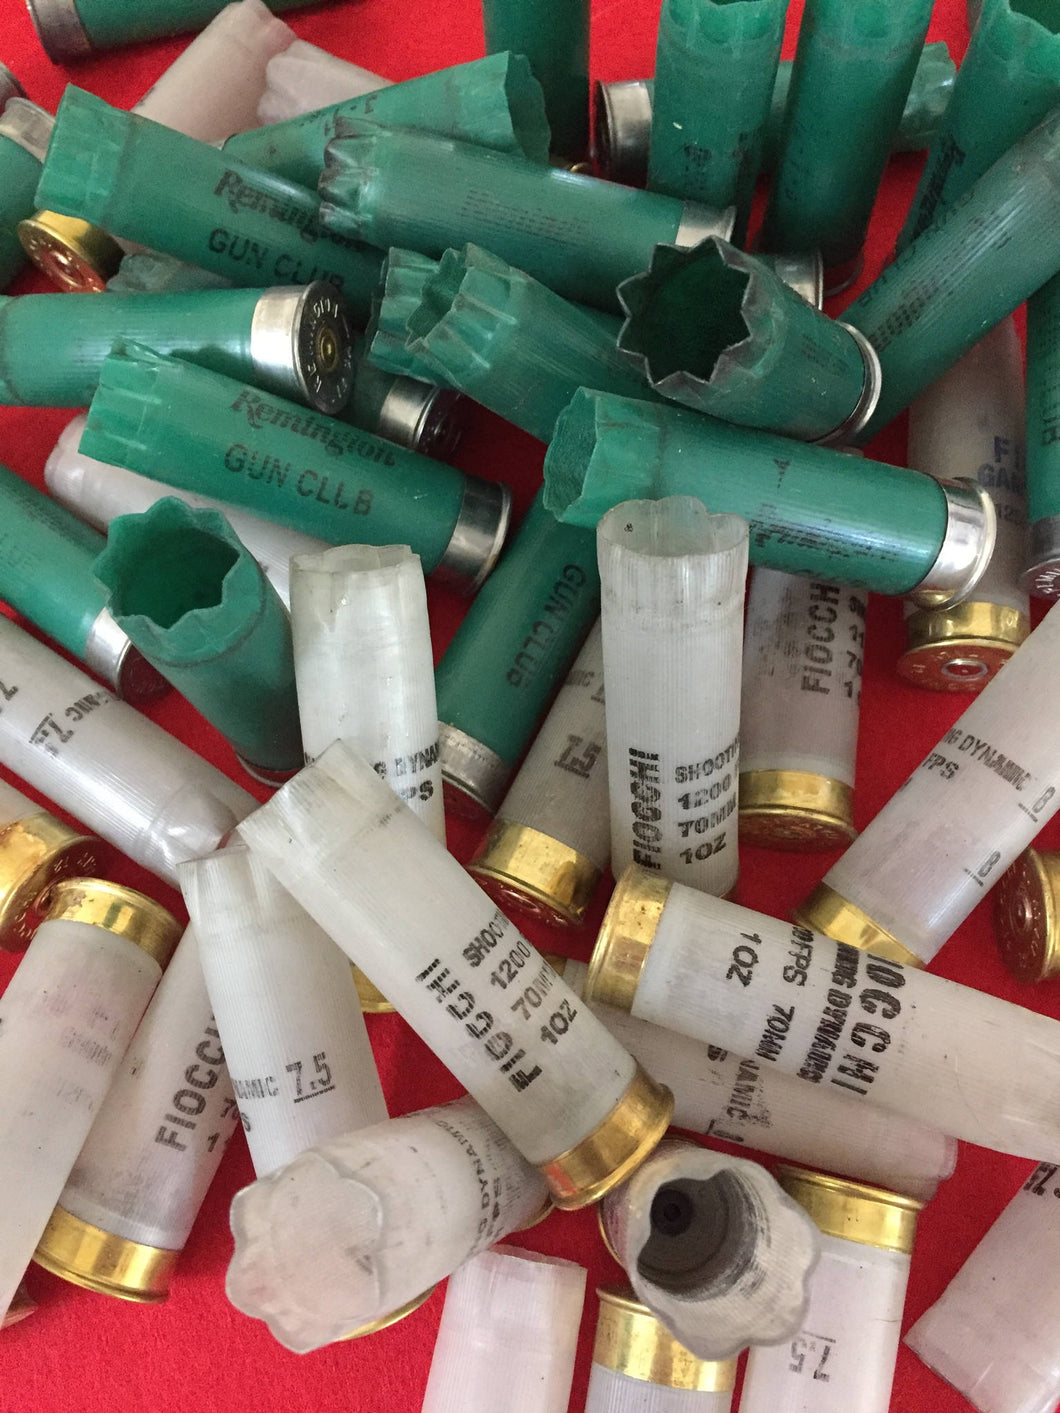 Green and Translucent White 12 Gauge Empty Shotgun Shells Once Fired Hulls - Qty 240 Pcs